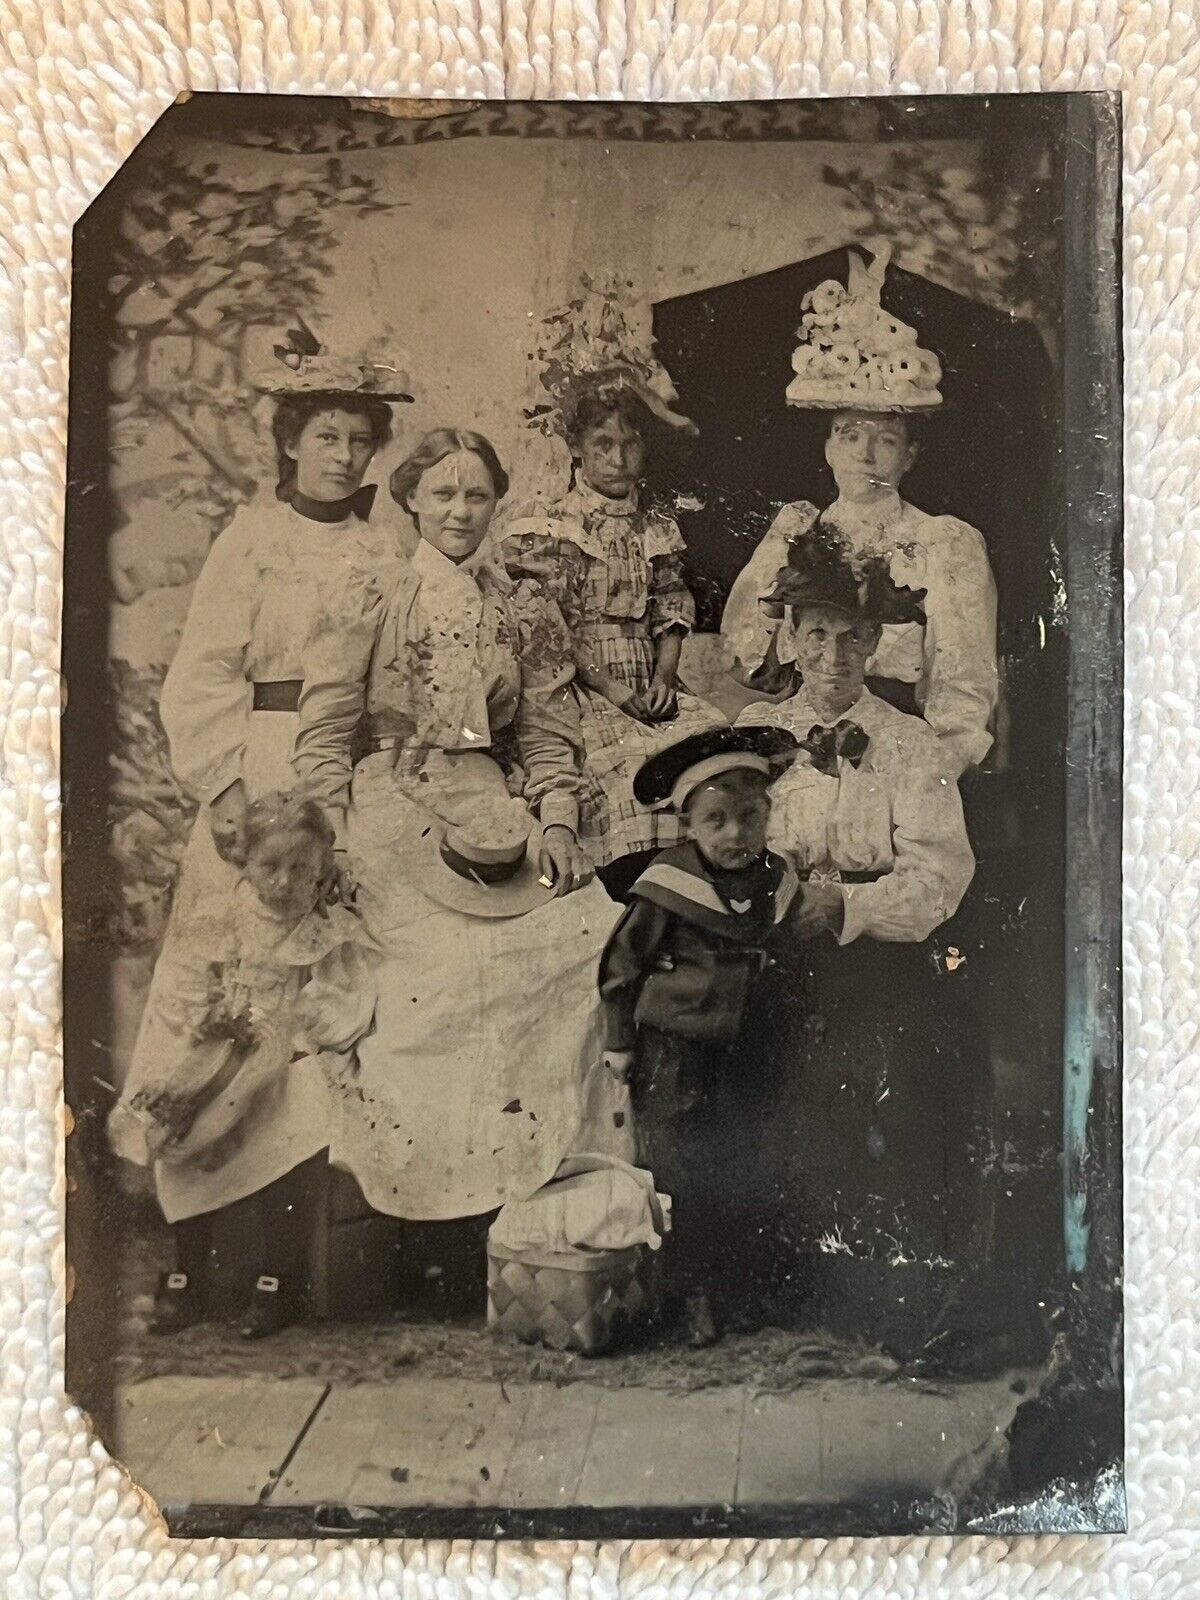 KILLER〰️ 1800s TINTYPE PHOTO of WOMEN & CHILDREN with AMAZING HATS 👀 LQQK 👀